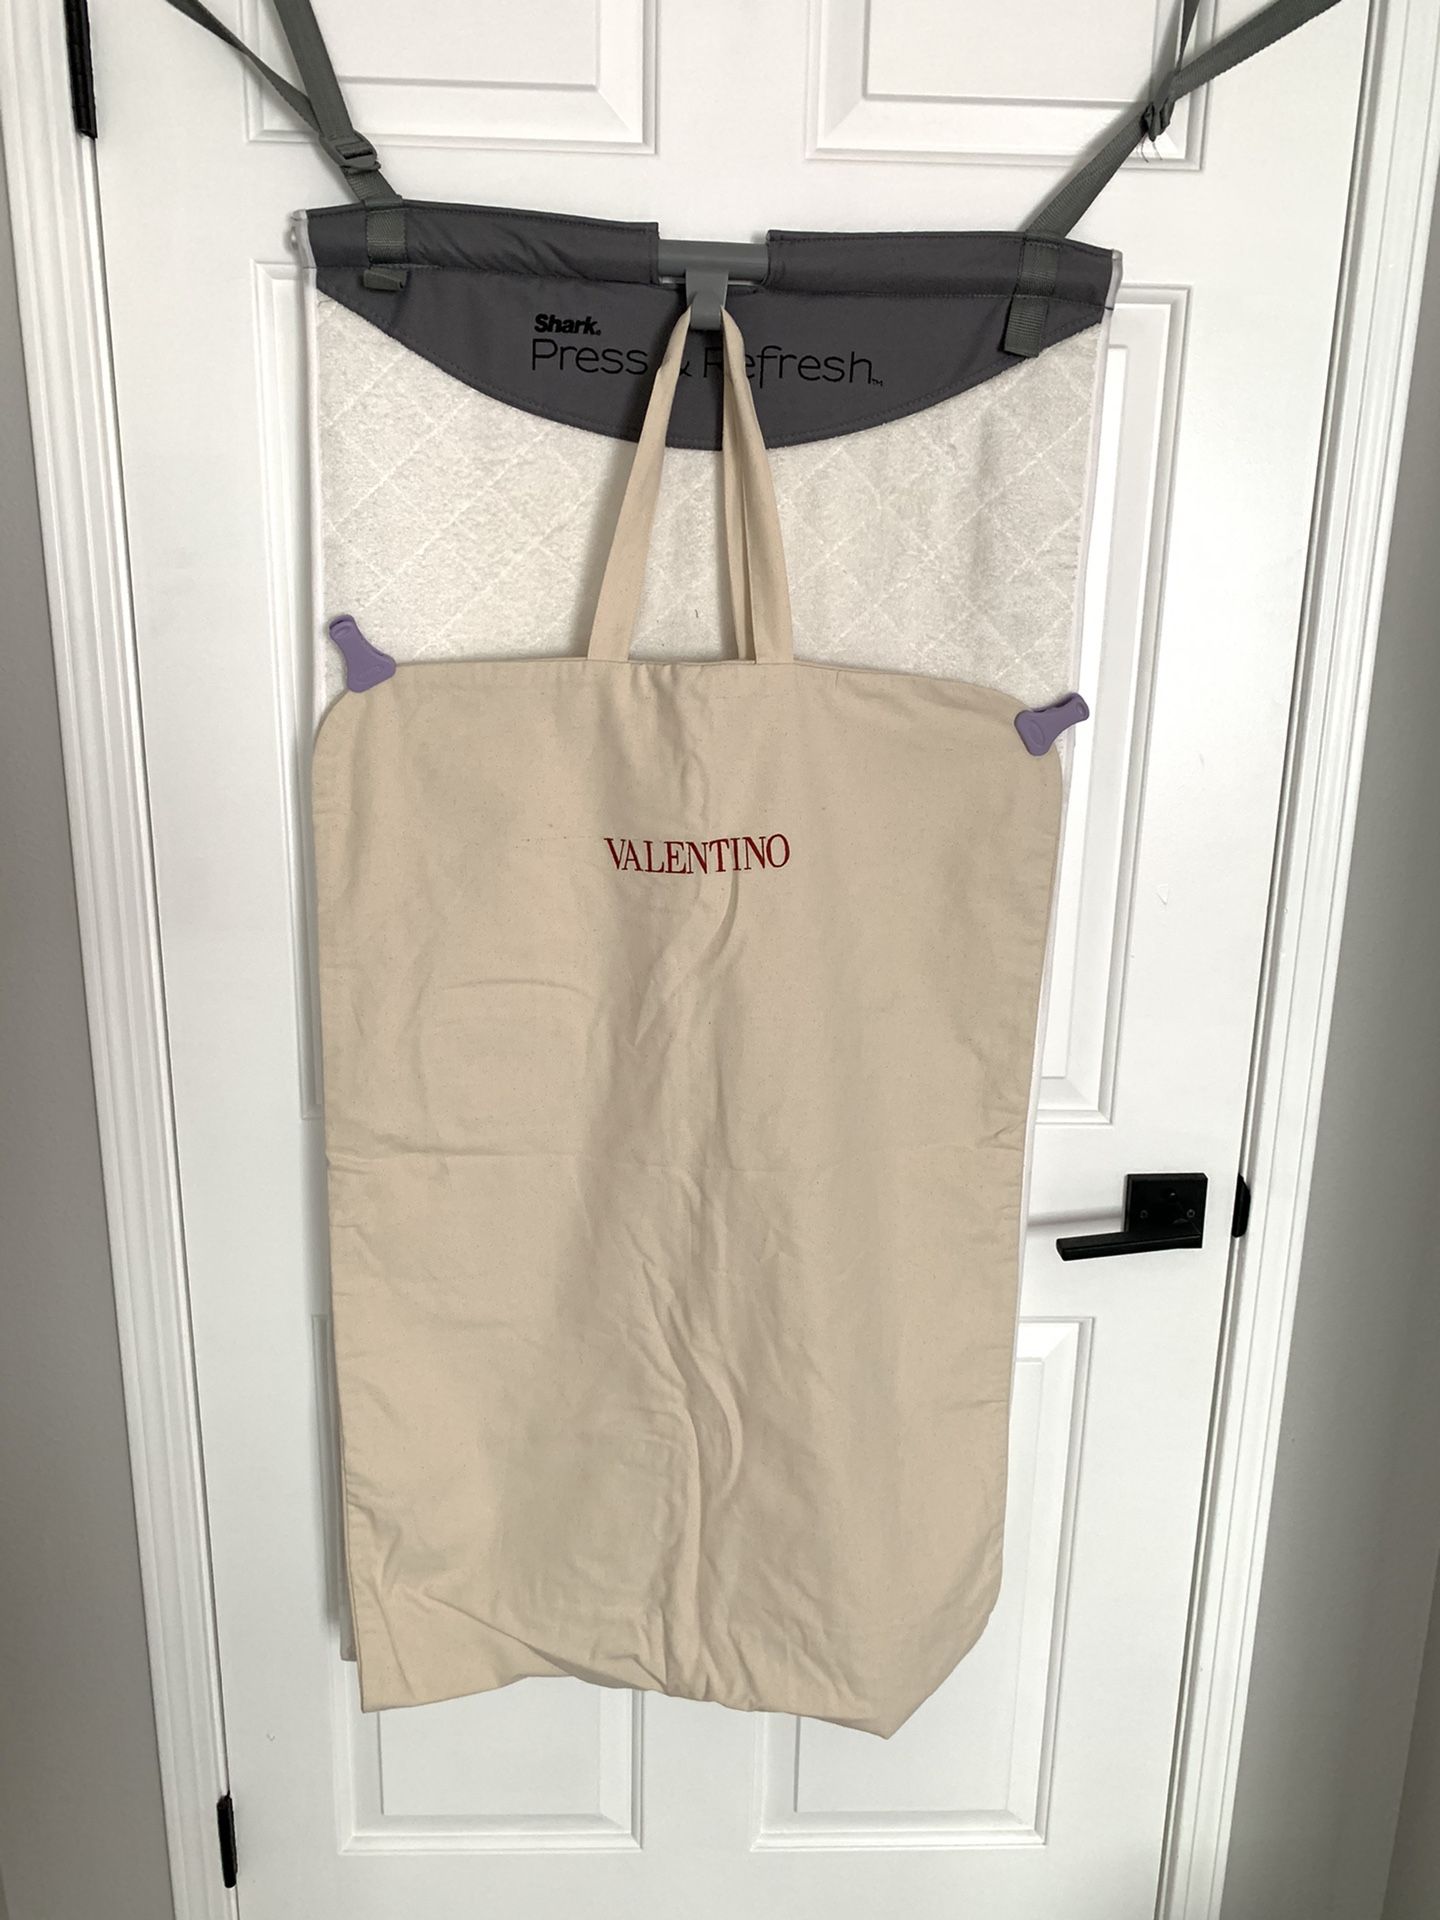 Authentic Valentino Garment Bag/Travel Bag